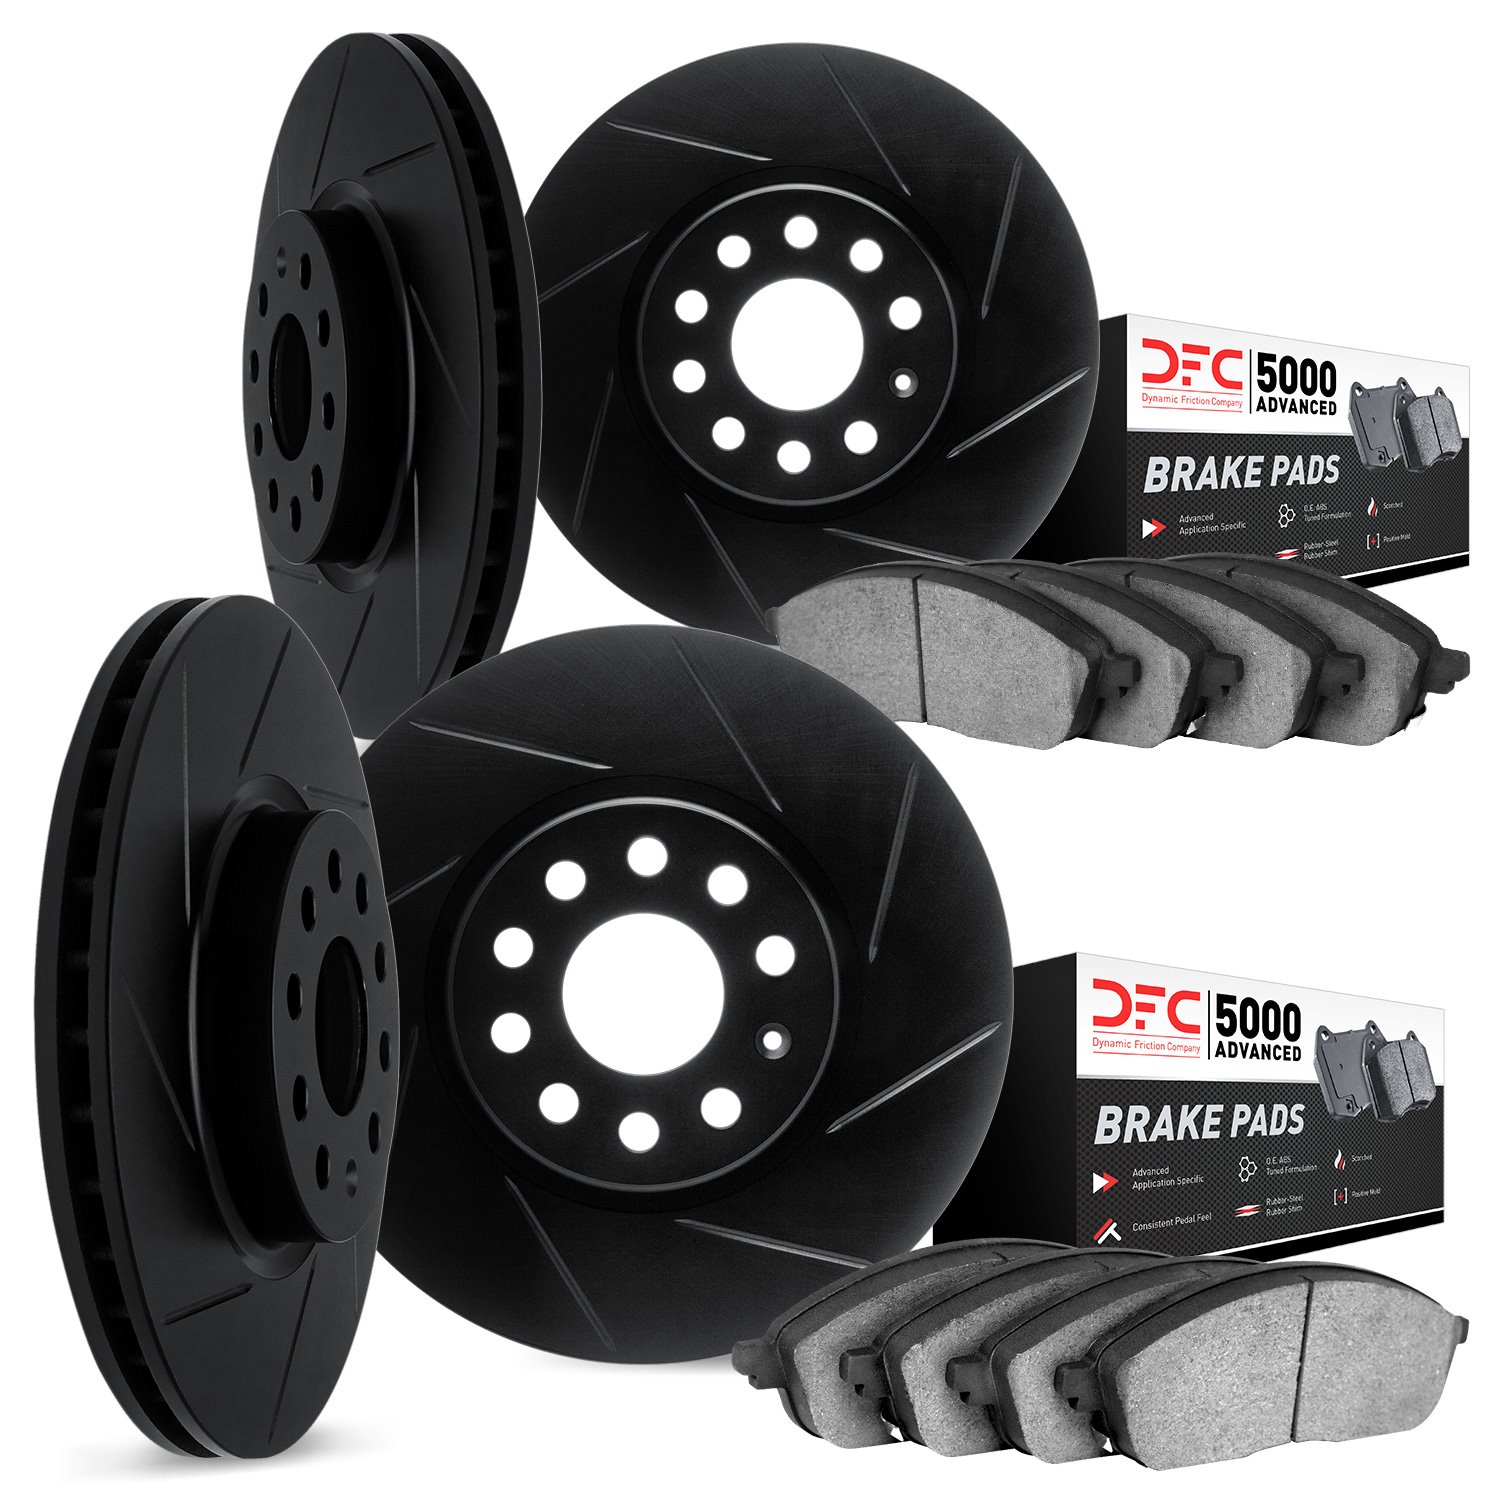 3514-80033 Slotted Brake Rotors w/5000 Advanced Brake Pads Kit & Hardware [Black], 2007-2015 Ford/Lincoln/Mercury/Mazda, Positio